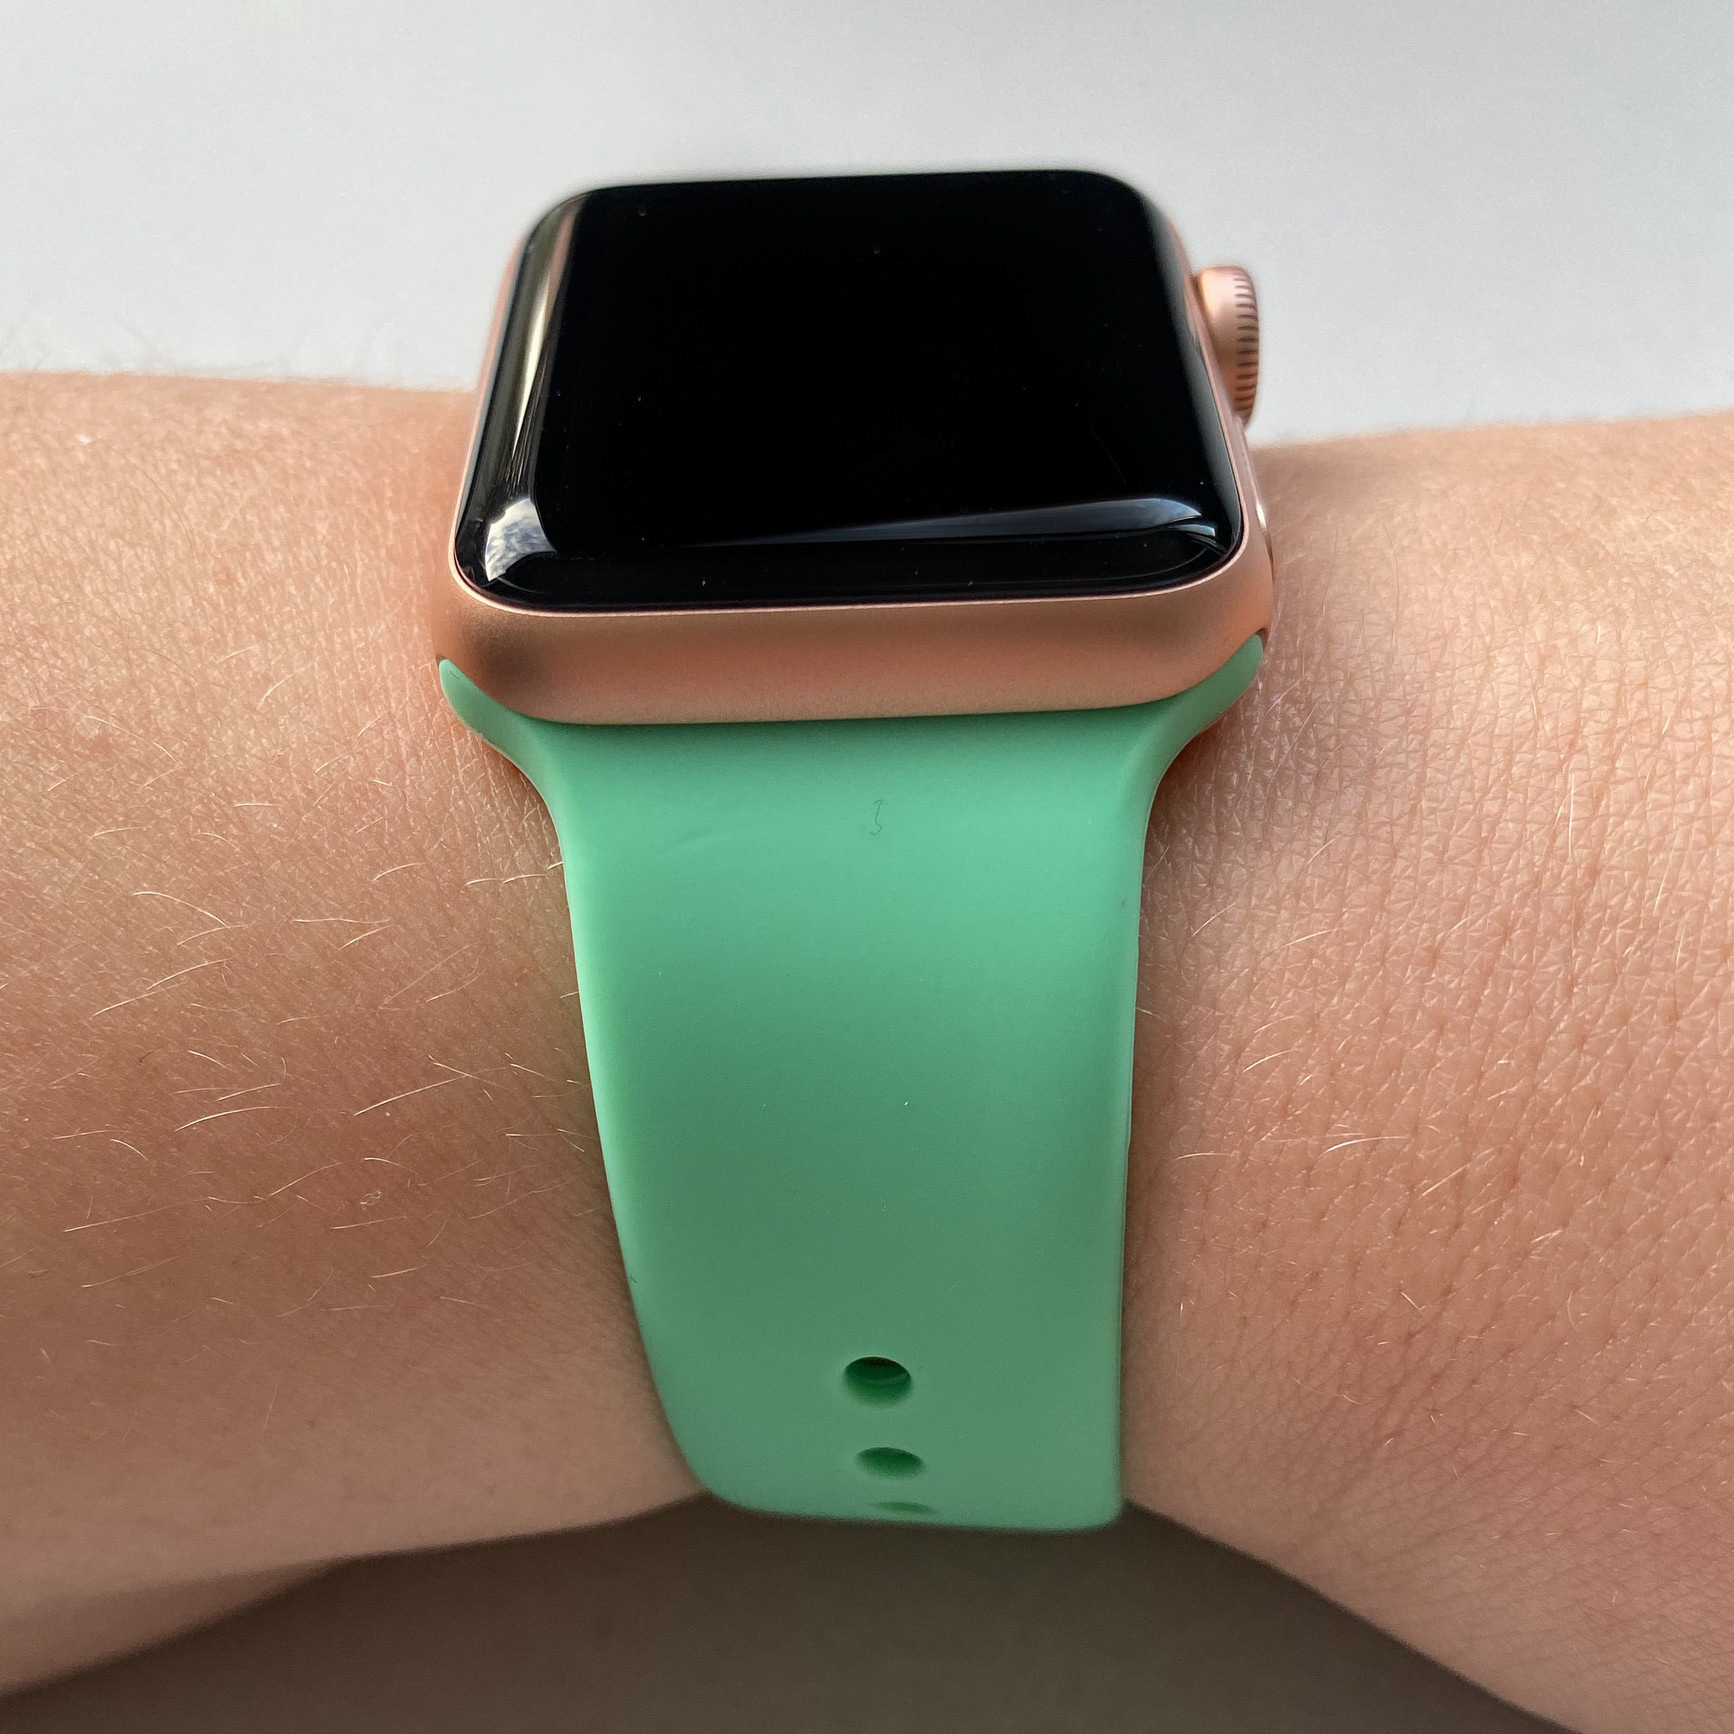 Cinturino sport per Apple Watch - menta verde